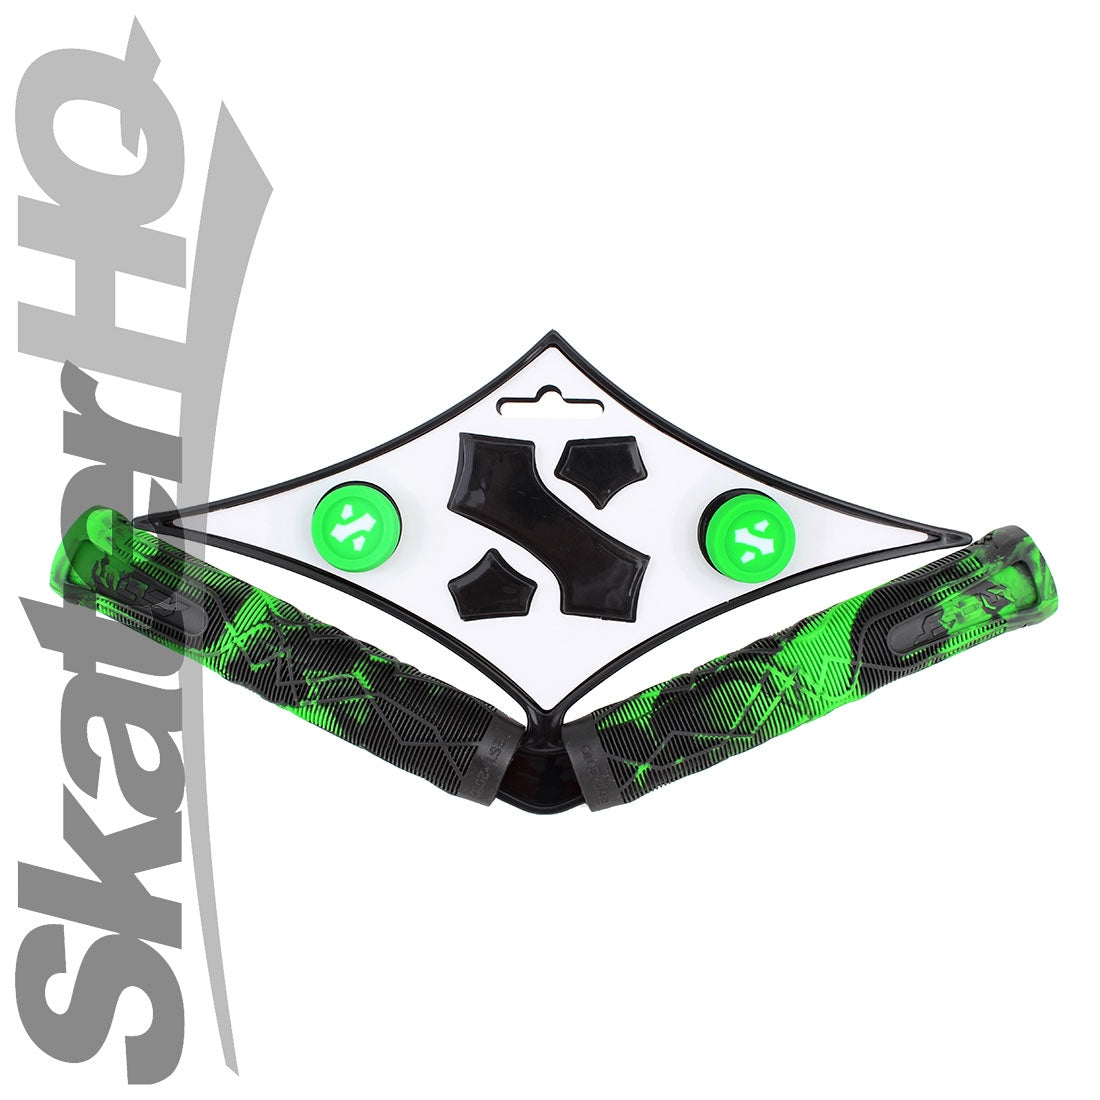 Sacrifice Spy Grips - Green/Black Swirl Scooter Grips